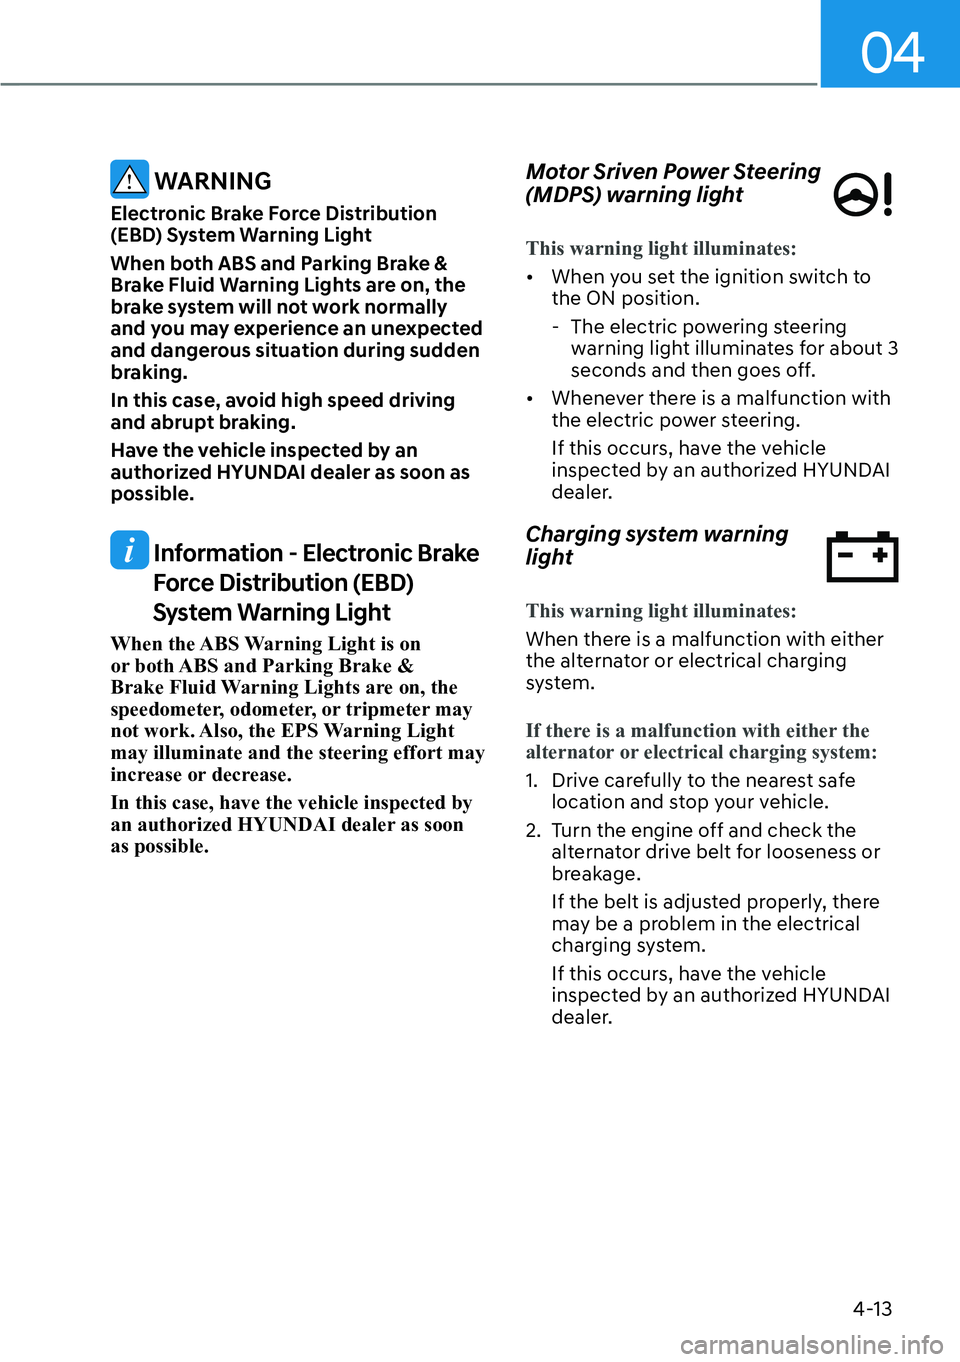 HYUNDAI PALISADE 2023  Owners Manual 04
4-13
 WARNING
Electronic Brake Force Distribution 
(EBD) System Warning Light
When both ABS and Parking Brake & 
Brake Fluid Warning Lights are on, the 
brake system will not work normally 
and you